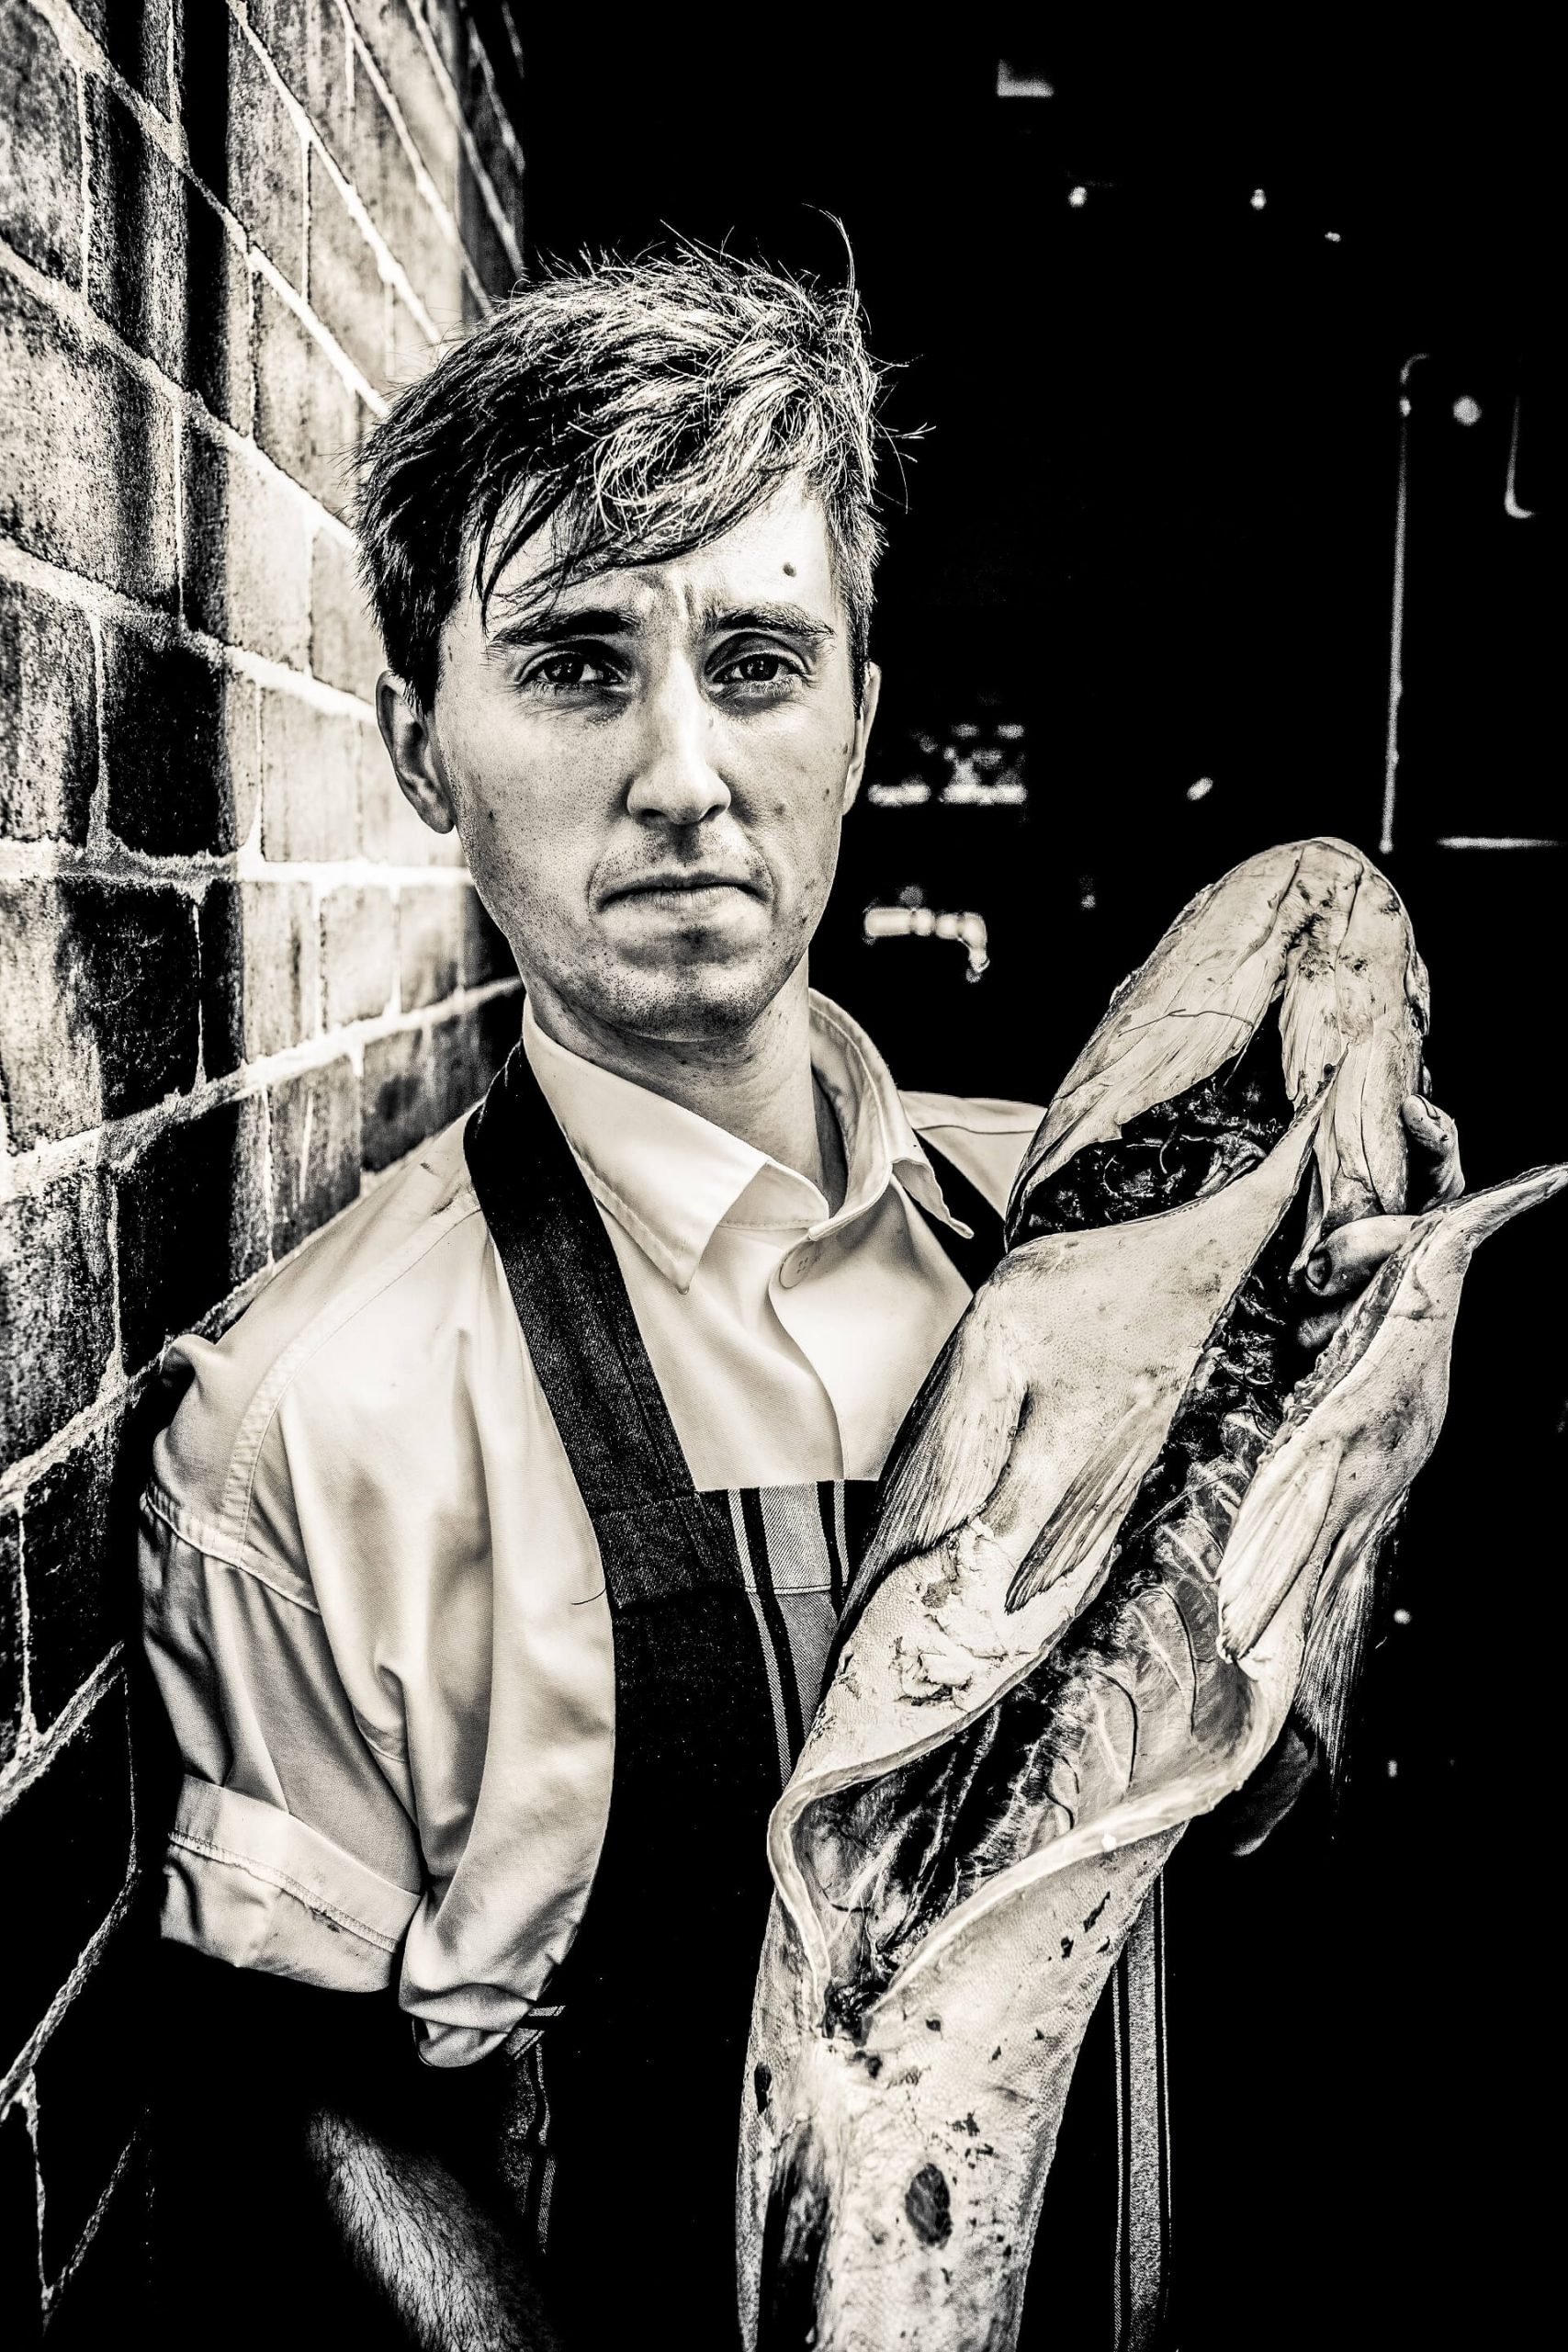 Portrait of Top Australian chef and fish guru Josh Niland - an inspiration for chefs worldwide.